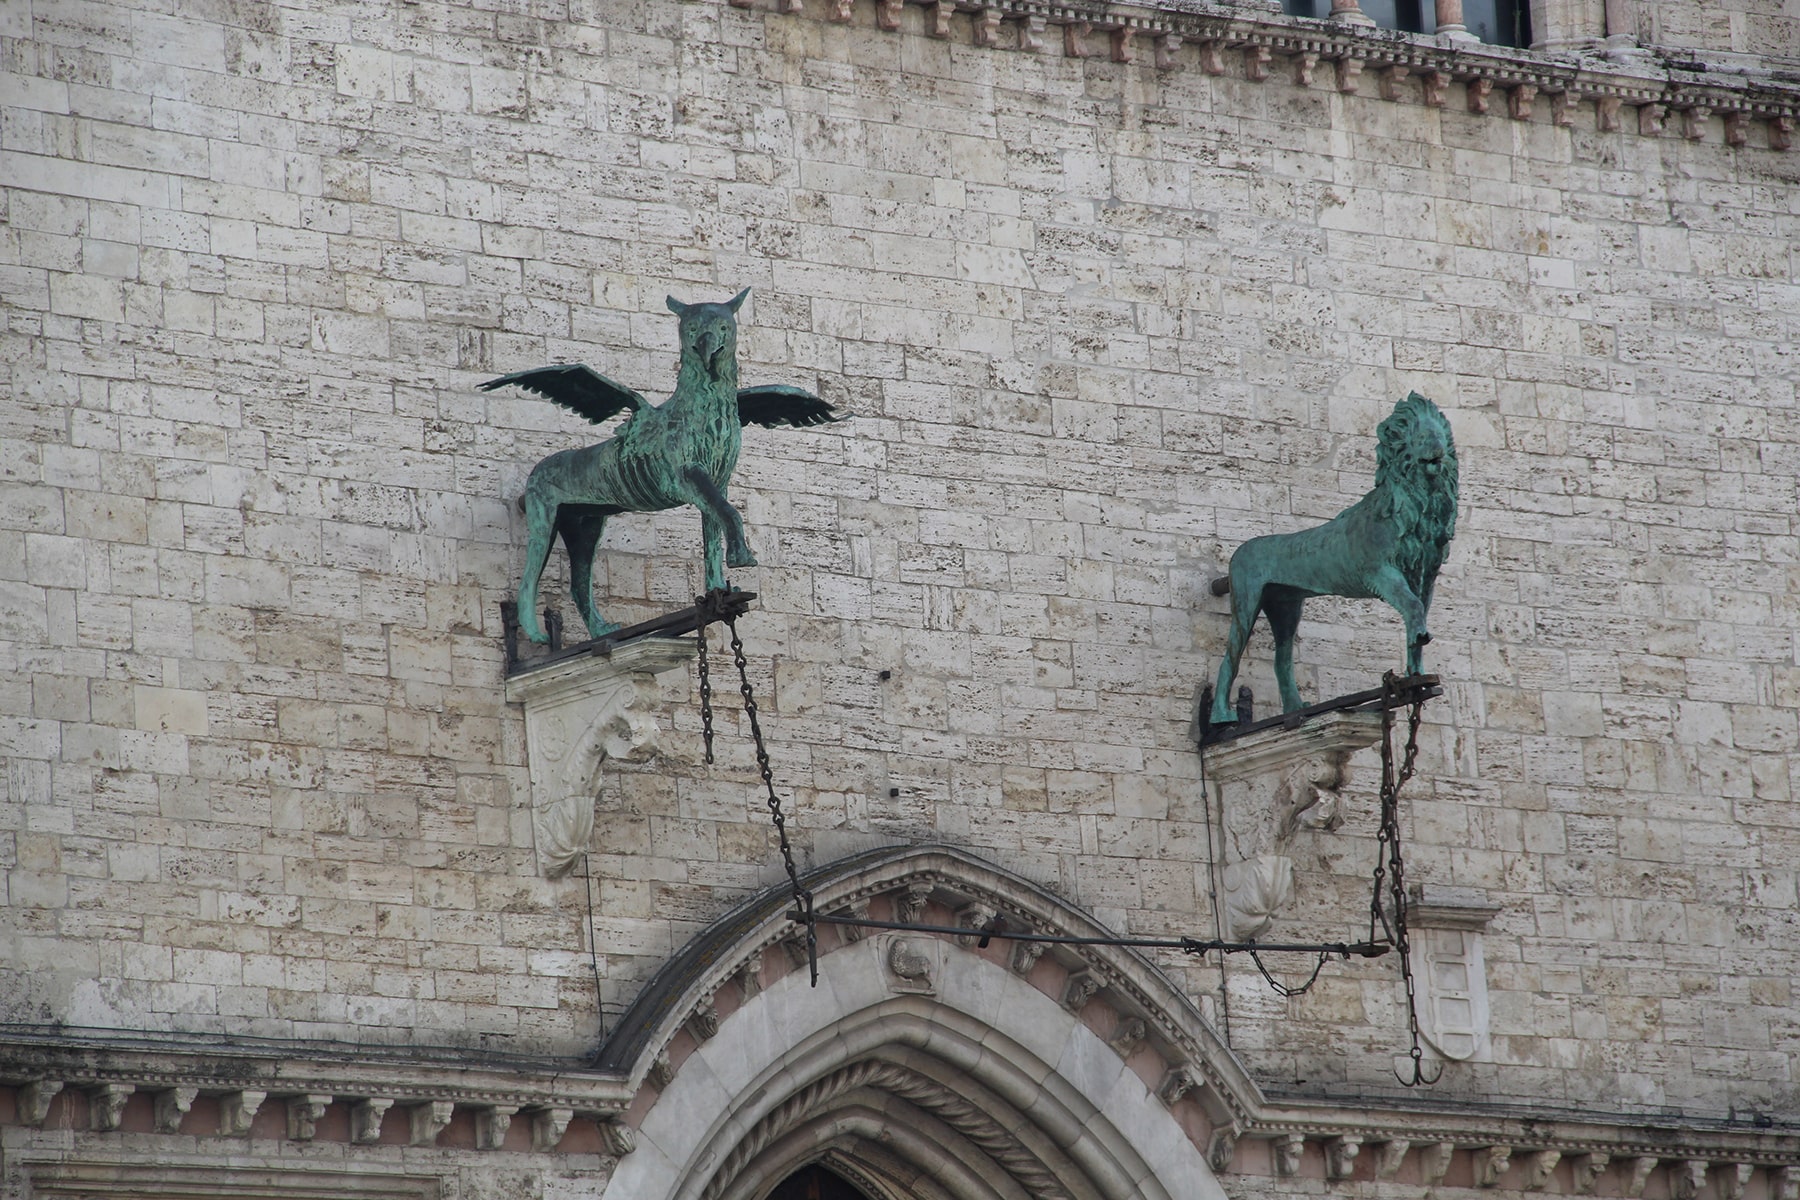 Griffin and lion, symbols of Perugia